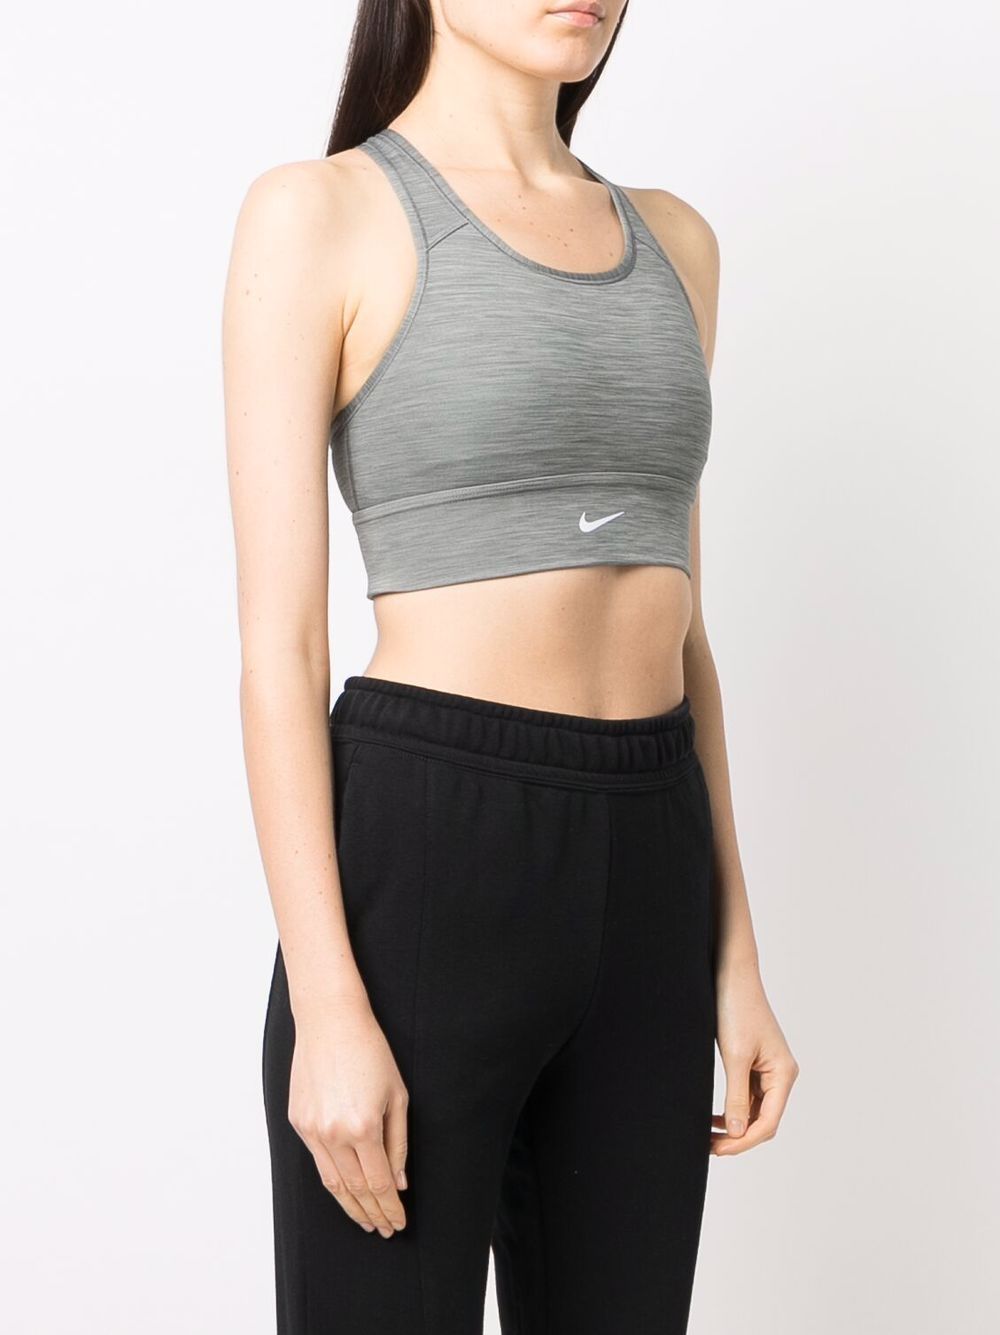 фото Nike бюстгальтер dri-fit средней степени поддержки